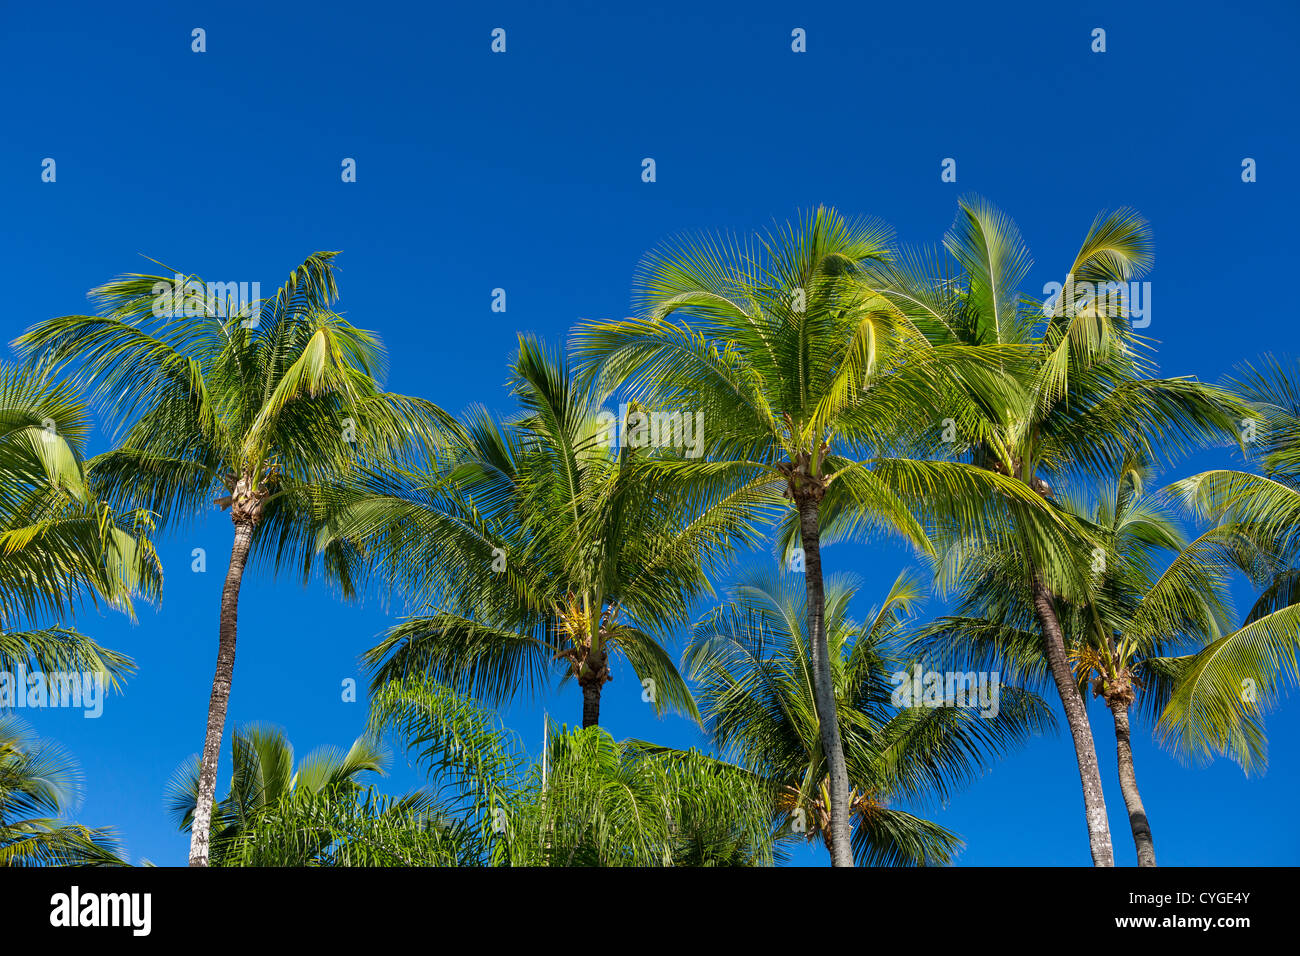 SAN JUAN, PUERTO RICO - Palm trees at Isla Verde beach resort area. Stock Photo